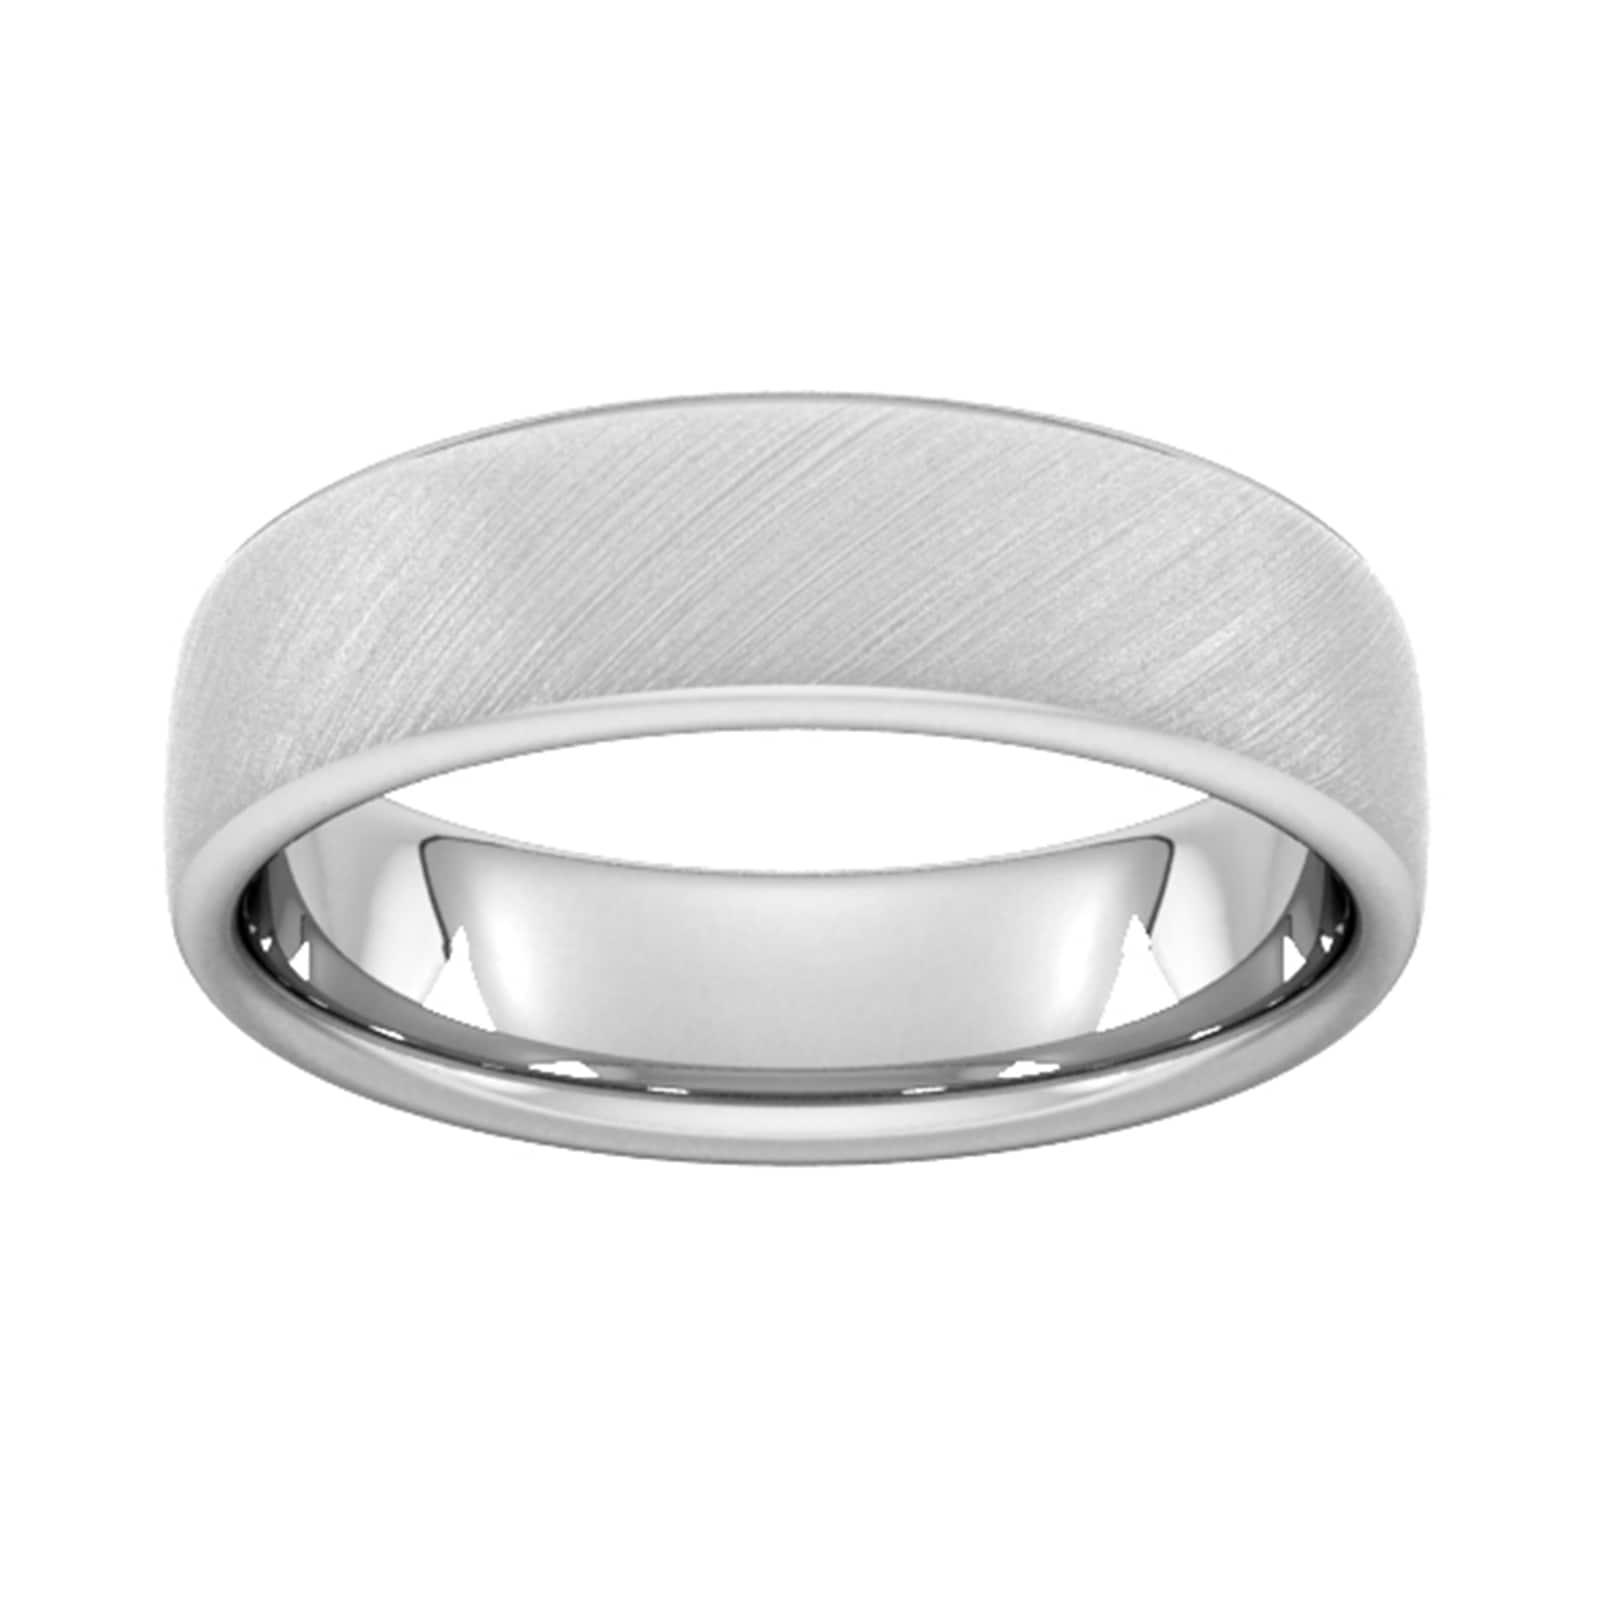 6mm Slight Court Standard Diagonal Matt Finish Wedding Ring In 18 Carat White Gold - Ring Size L